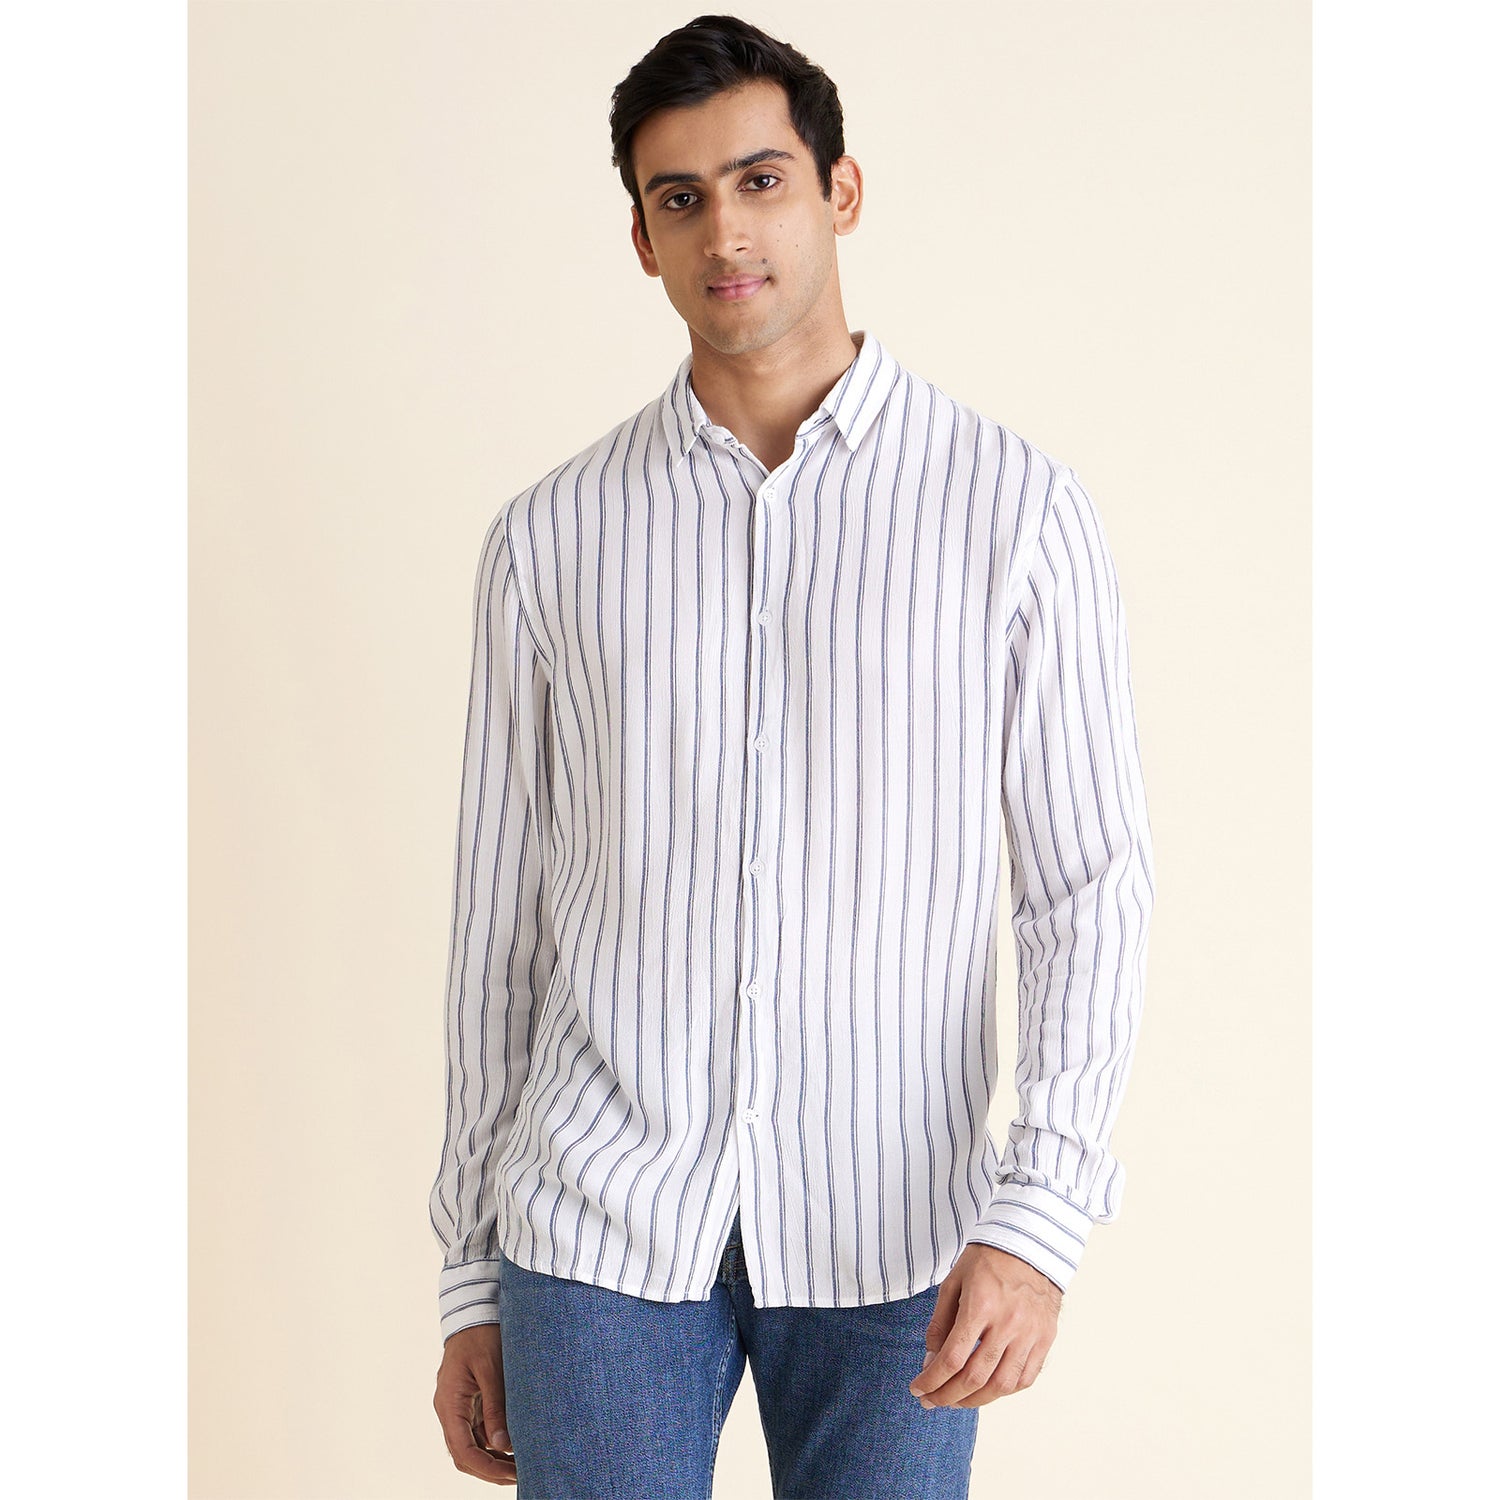 Grey Classic Striped Casual Shirt (DASEERLINE2)